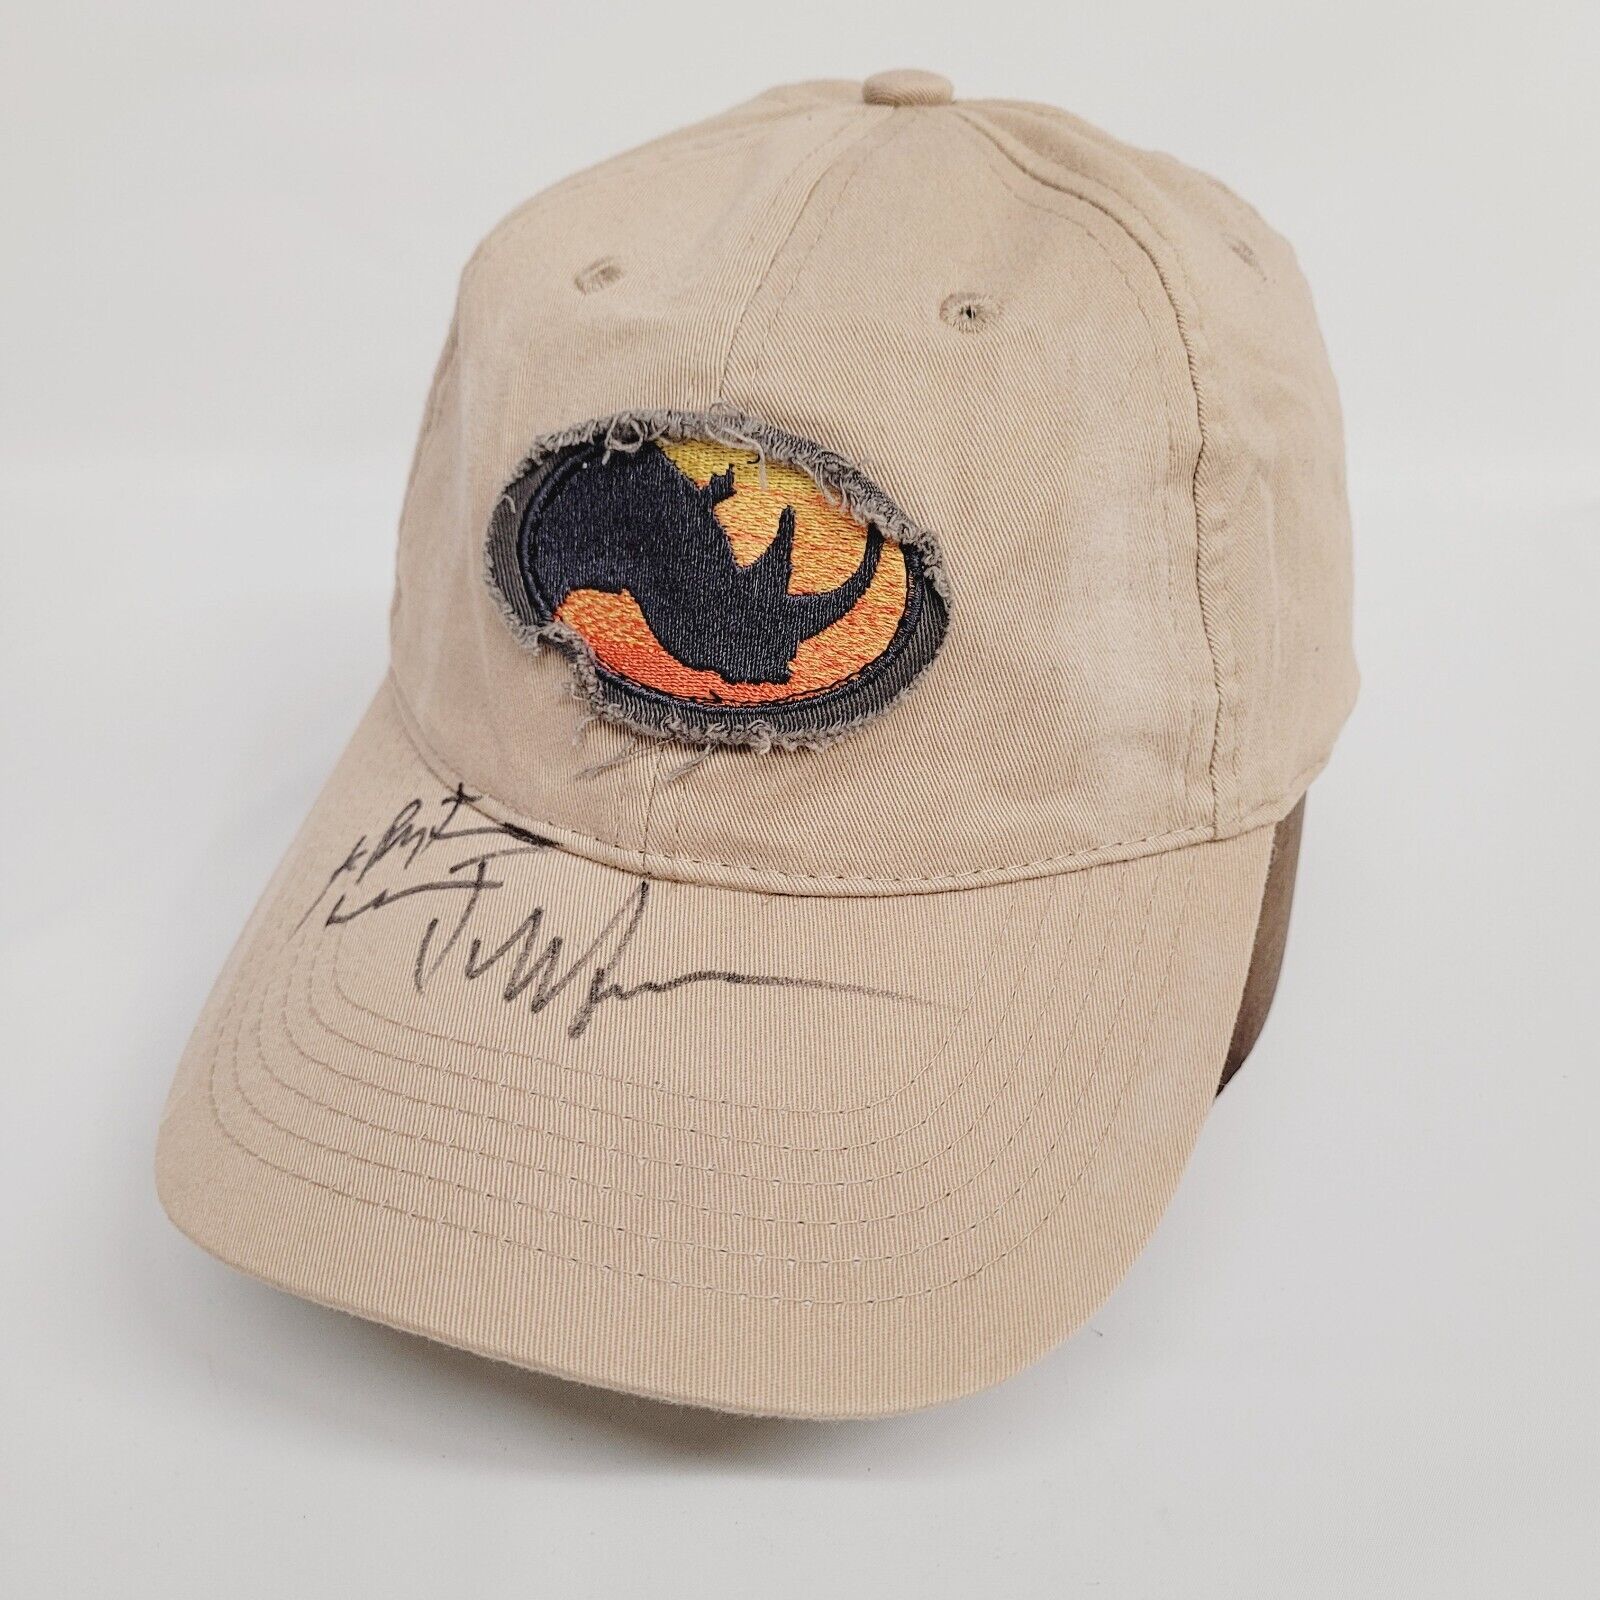 Jack Hanna Jungle Jack Columbus Zoo Signed Inscribed Baseball Cap Hat